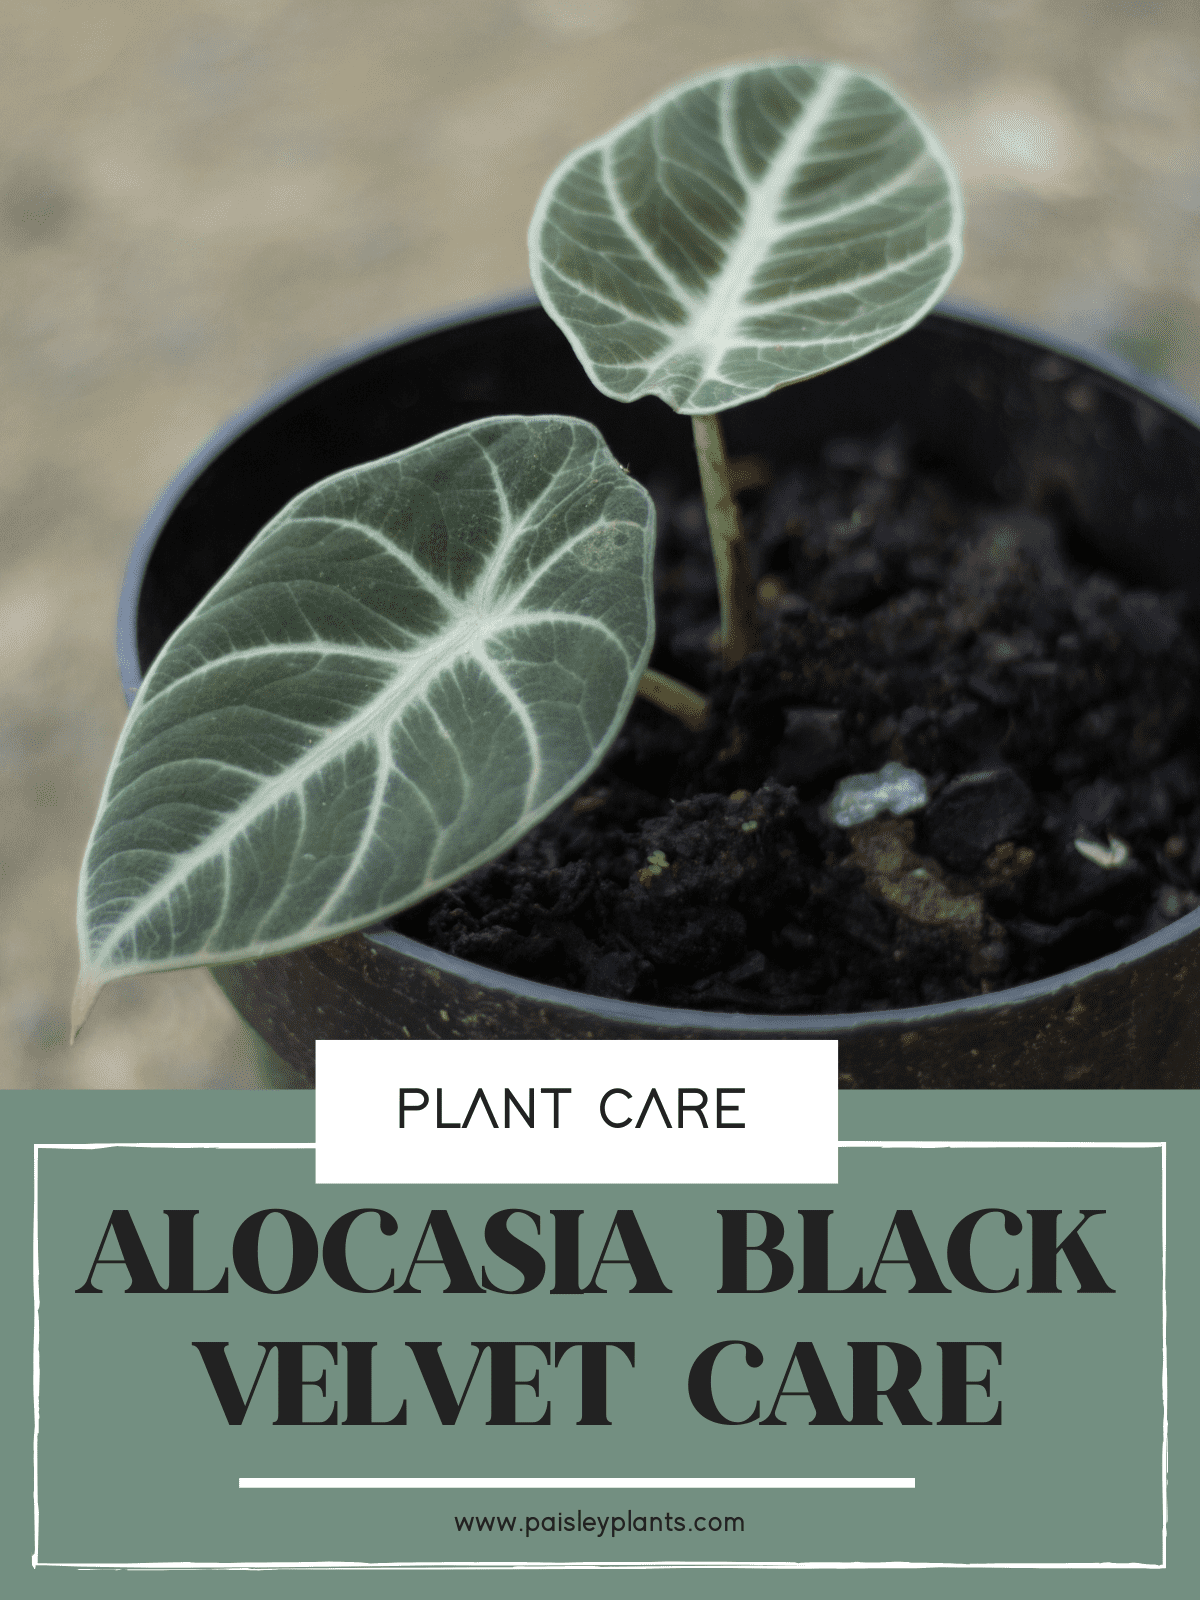  Alocasia black velvet care